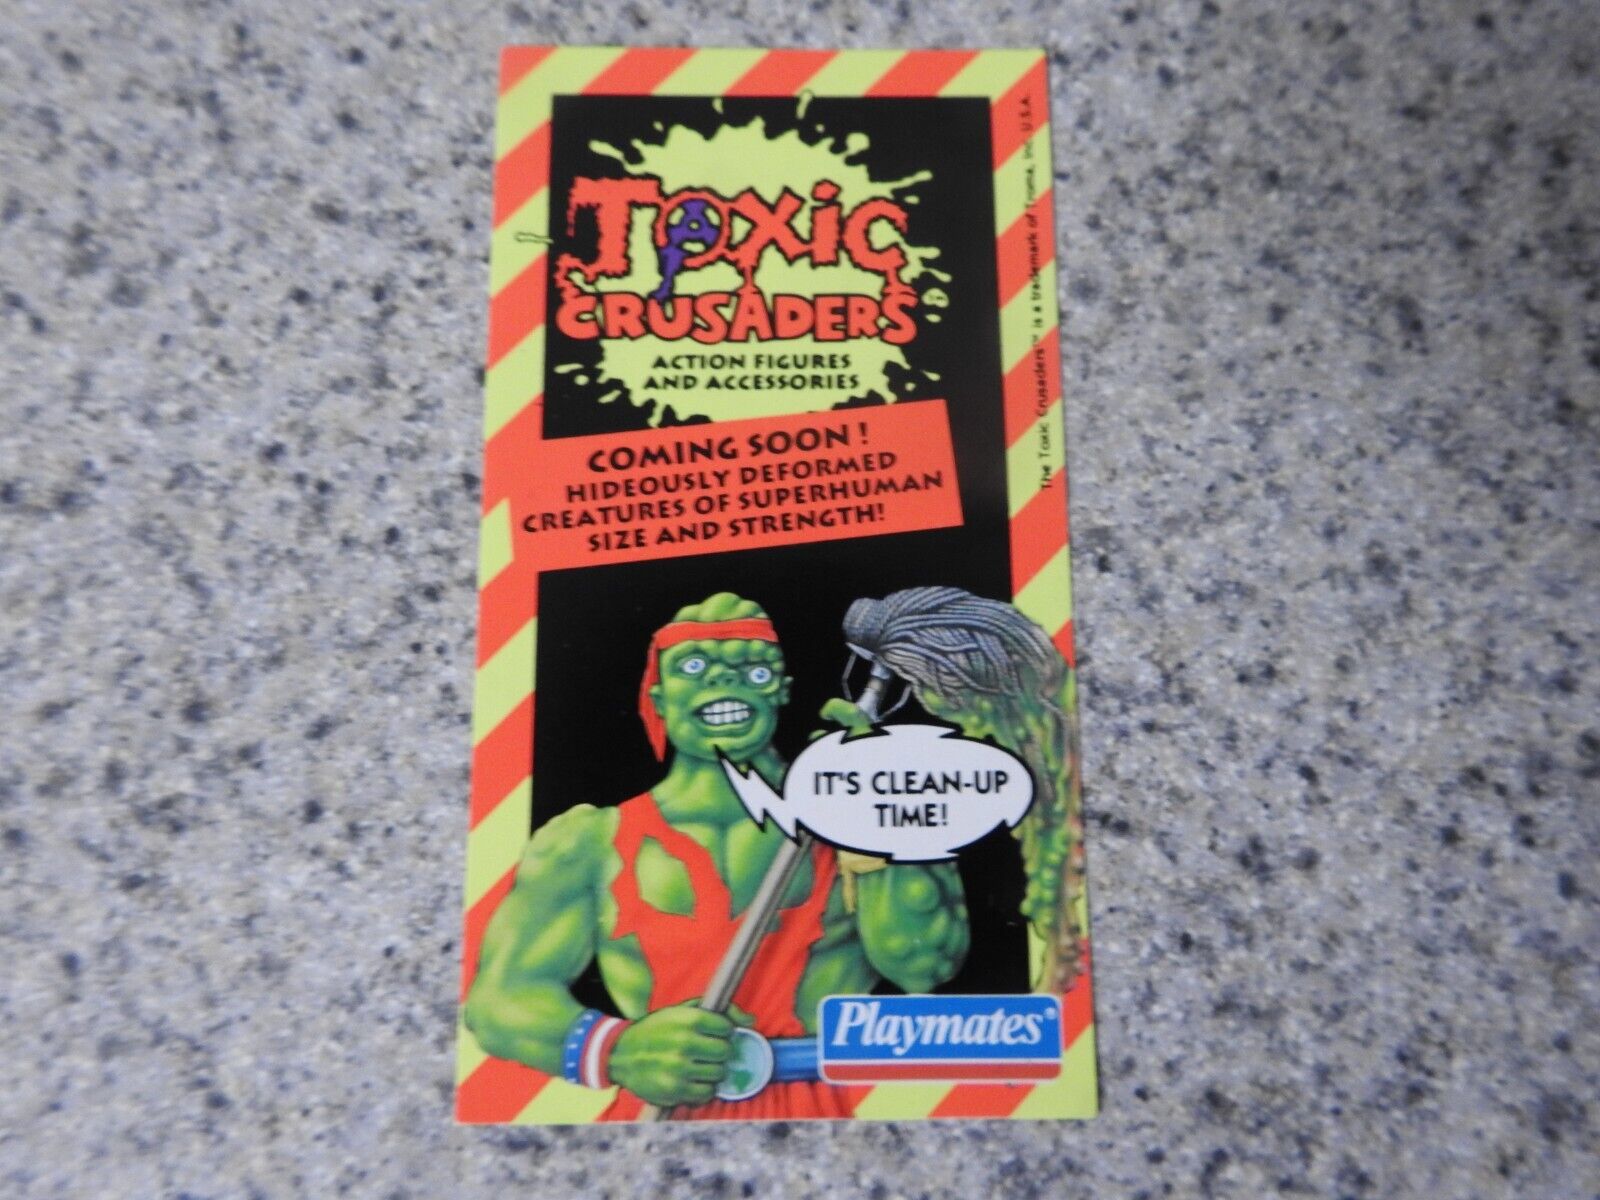 1991 Playmates TOXIC CRUSADERS bonus card/insert toyline coming soon promo RARE